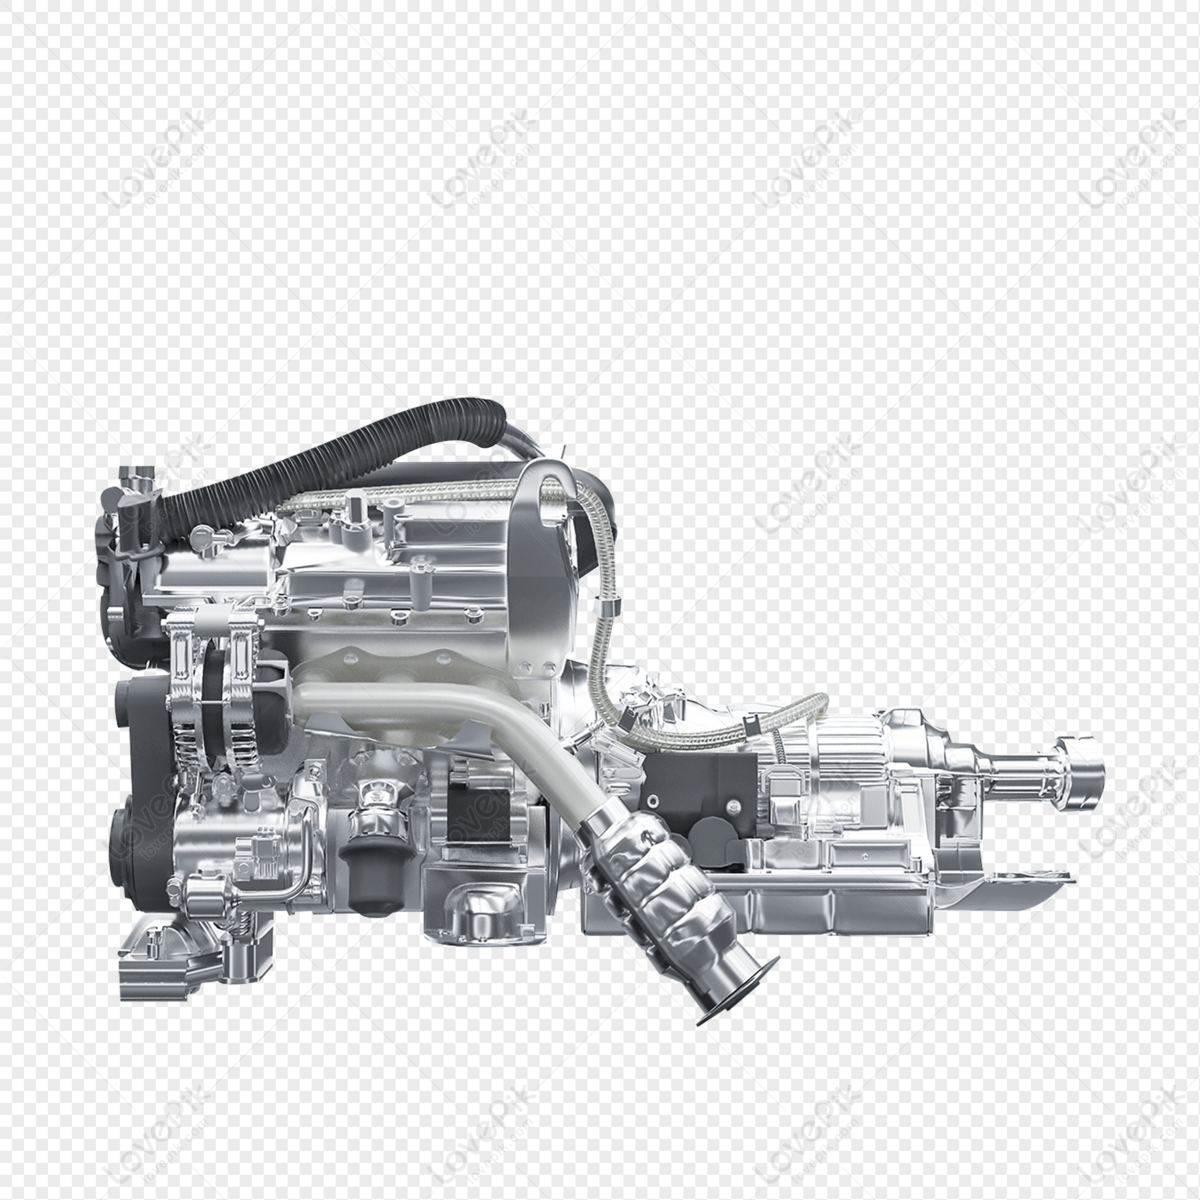 Automotive Engine3d Illustration Stock Photo - Download Image Now